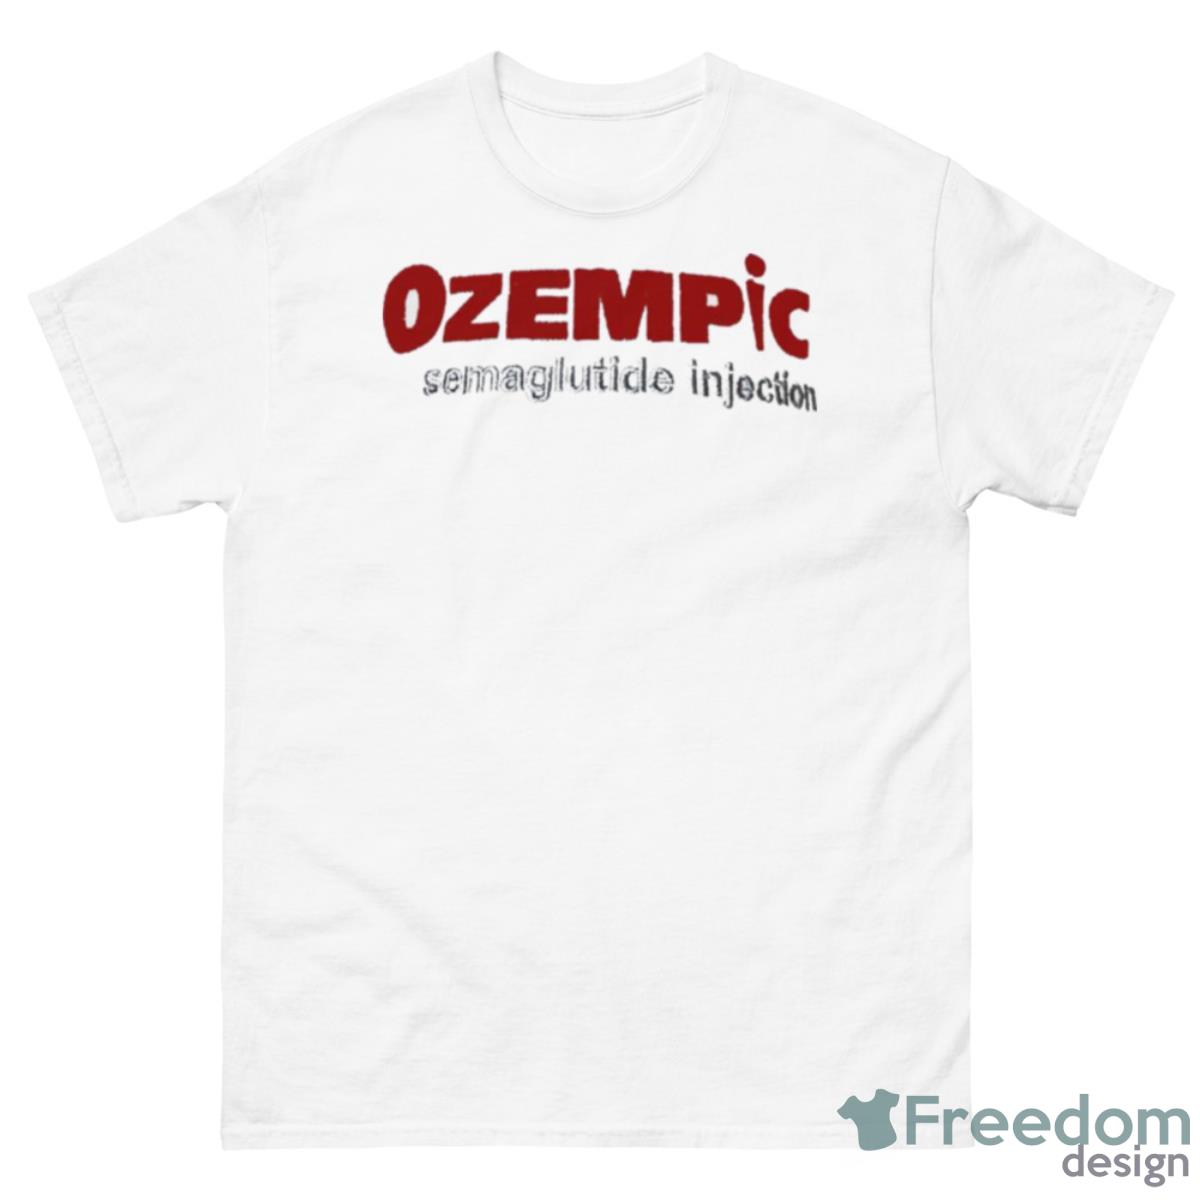 Ozempic Semaglutide Injection Shirt - 500 Men’s Classic Tee Gildan